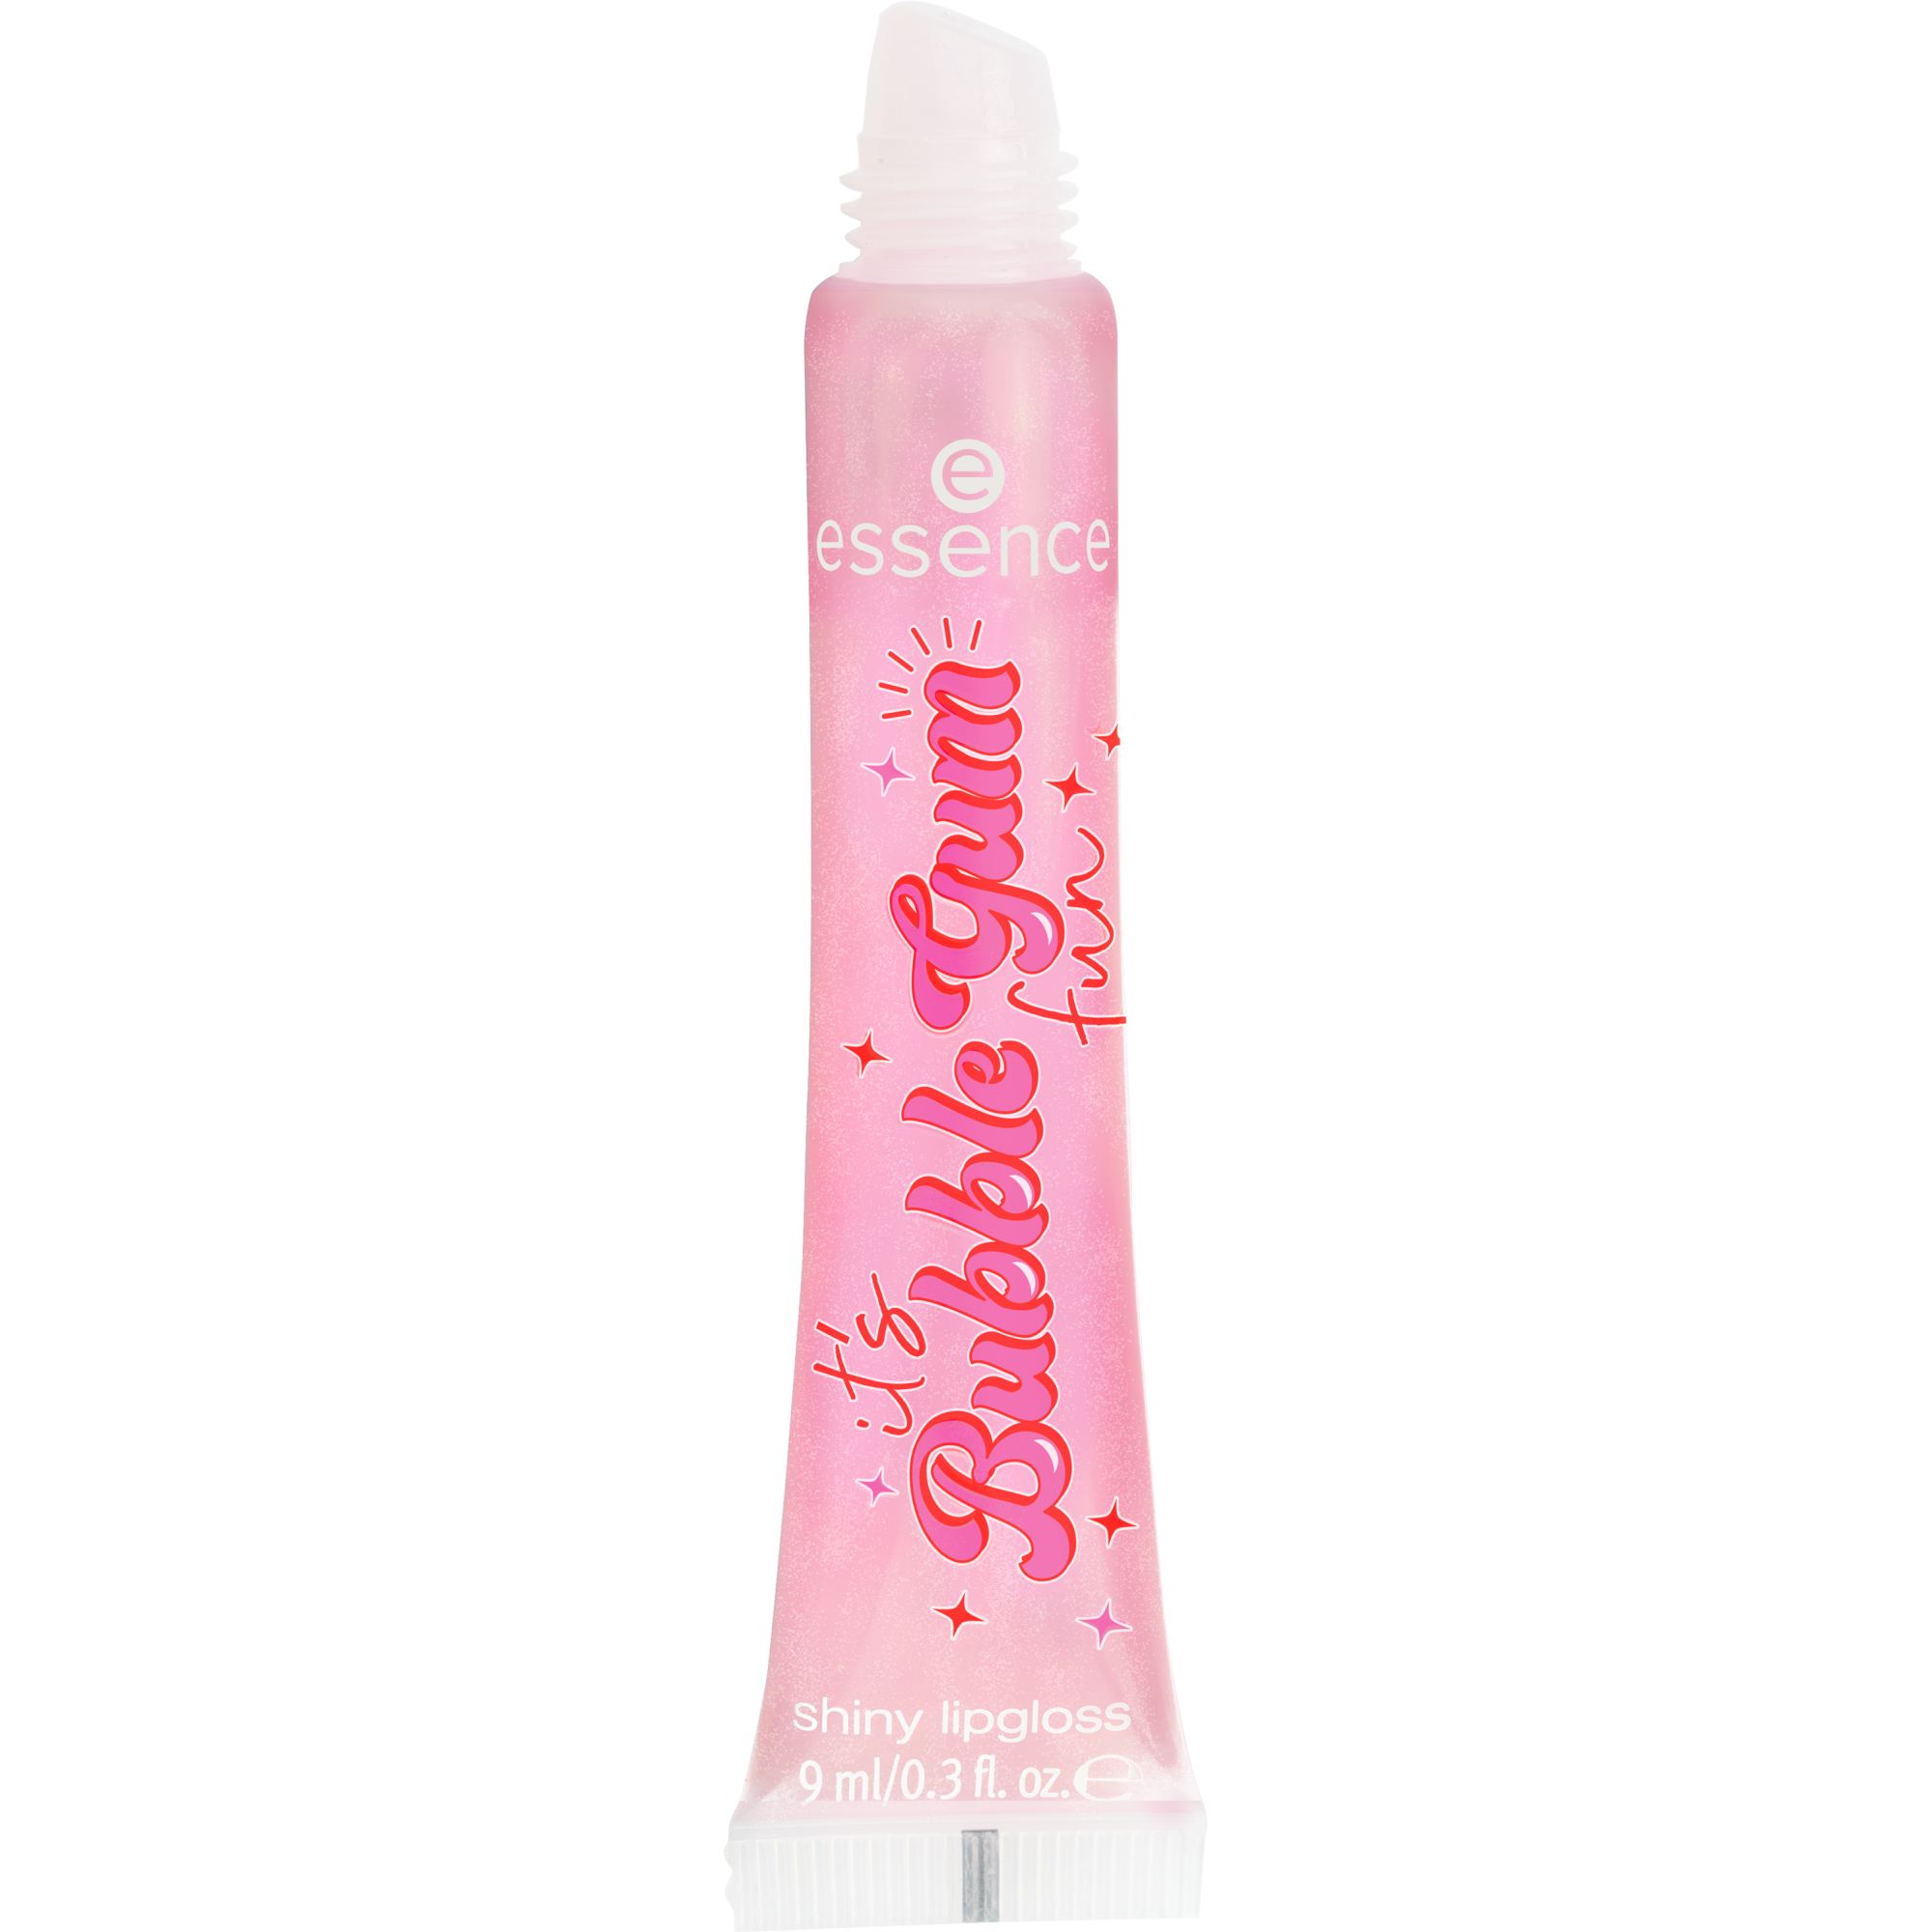 it’s Bubble Gum Fun shiny lipgloss